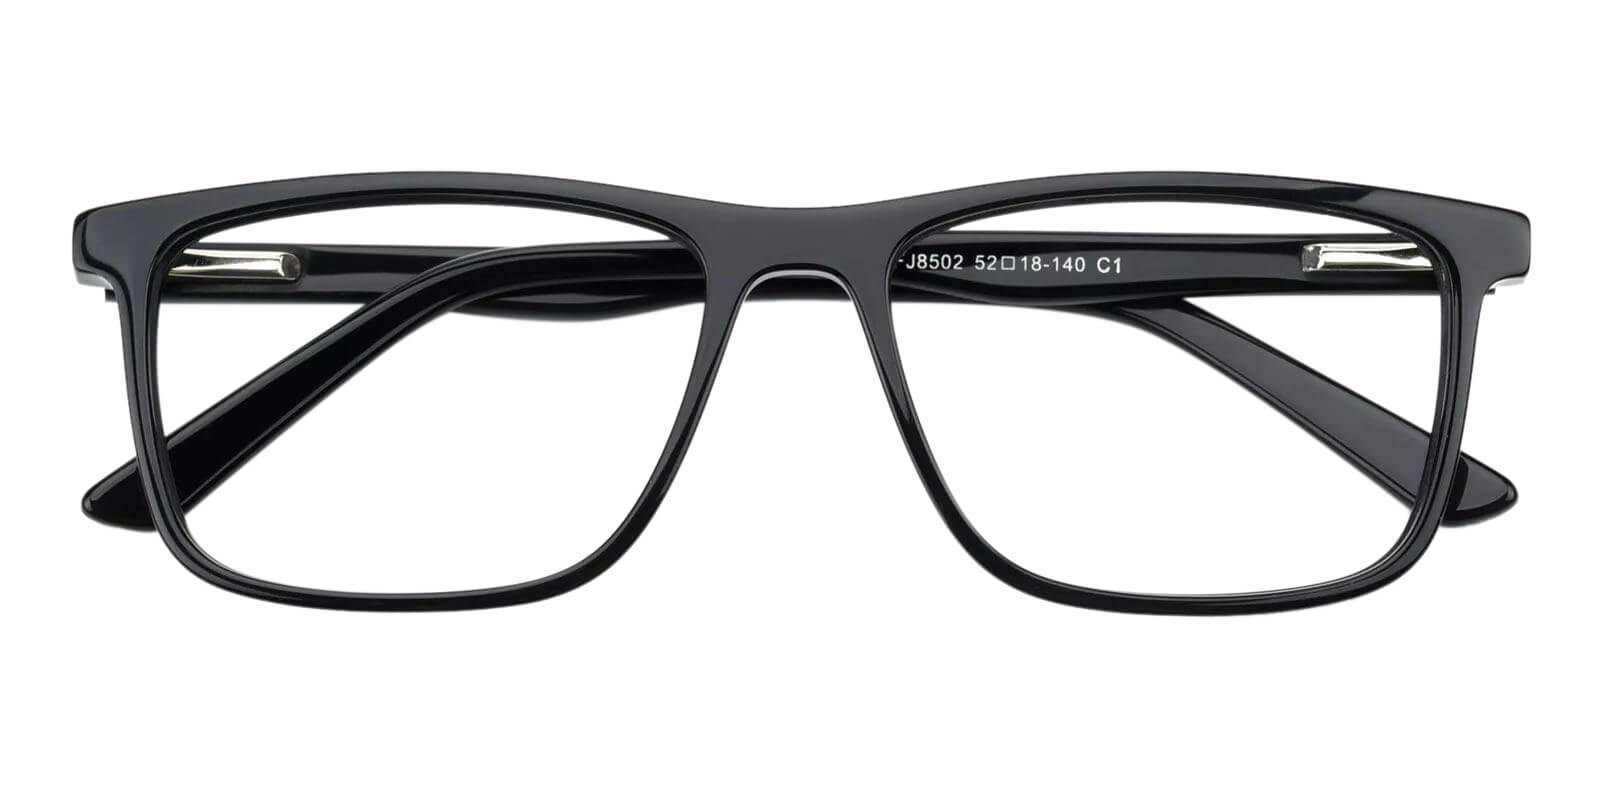 Fay Black Acetate Eyeglasses , Fashion , SpringHinges , UniversalBridgeFit Frames from ABBE Glasses